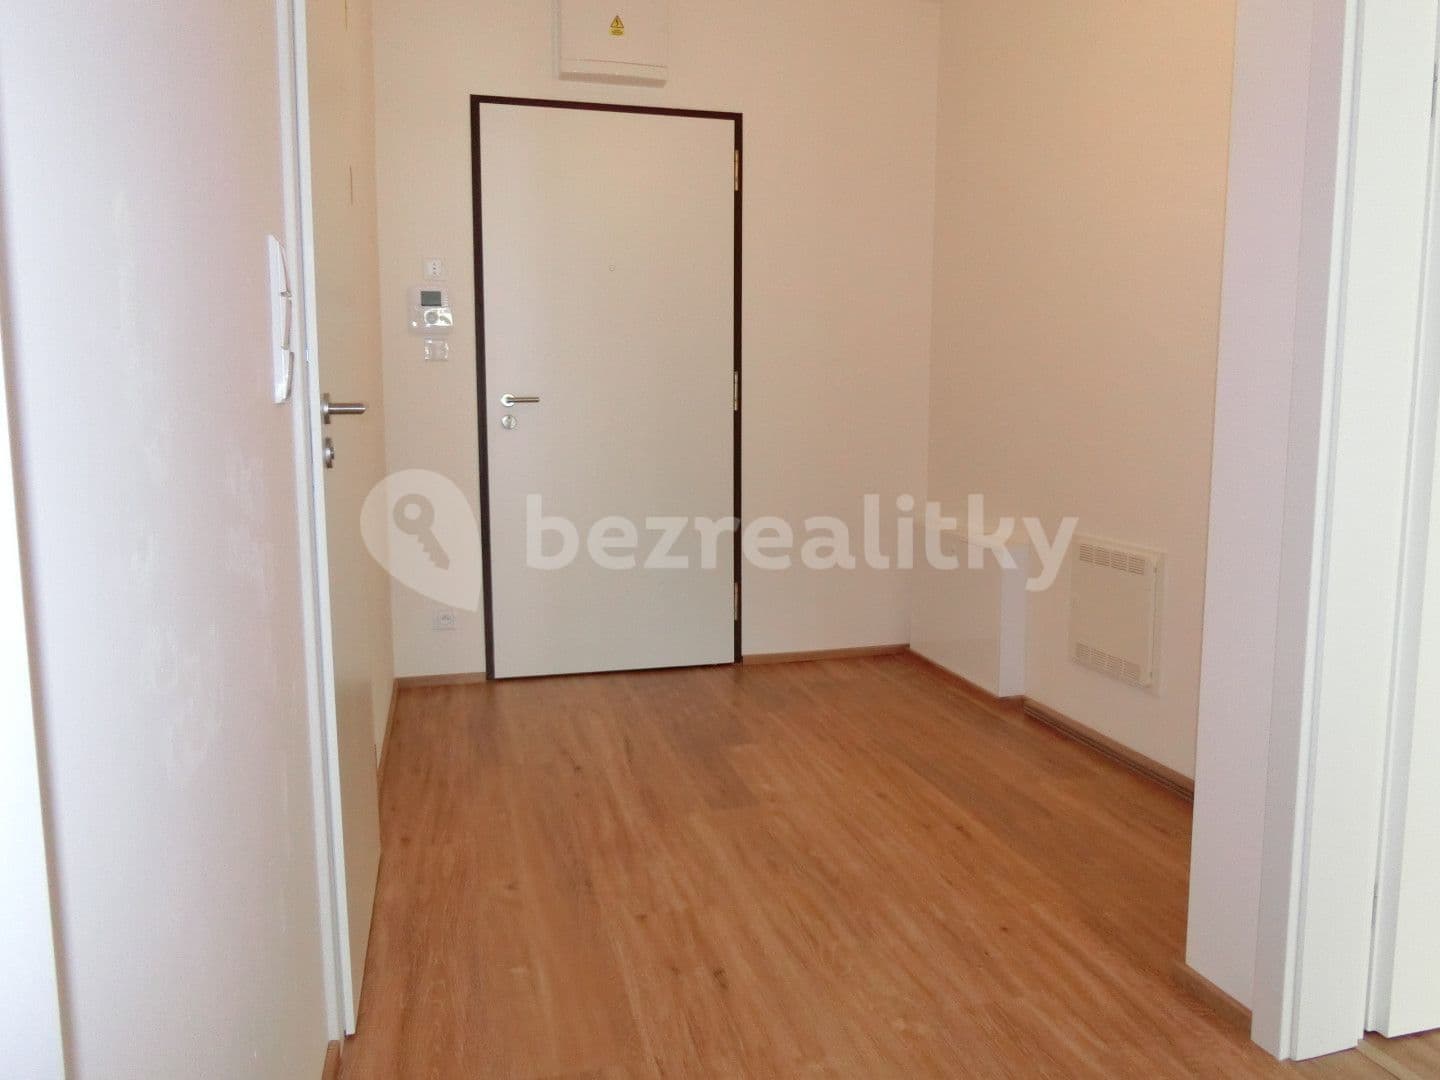 2 bedroom with open-plan kitchen flat for sale, 76 m², Čerpadlová, Prague, Prague